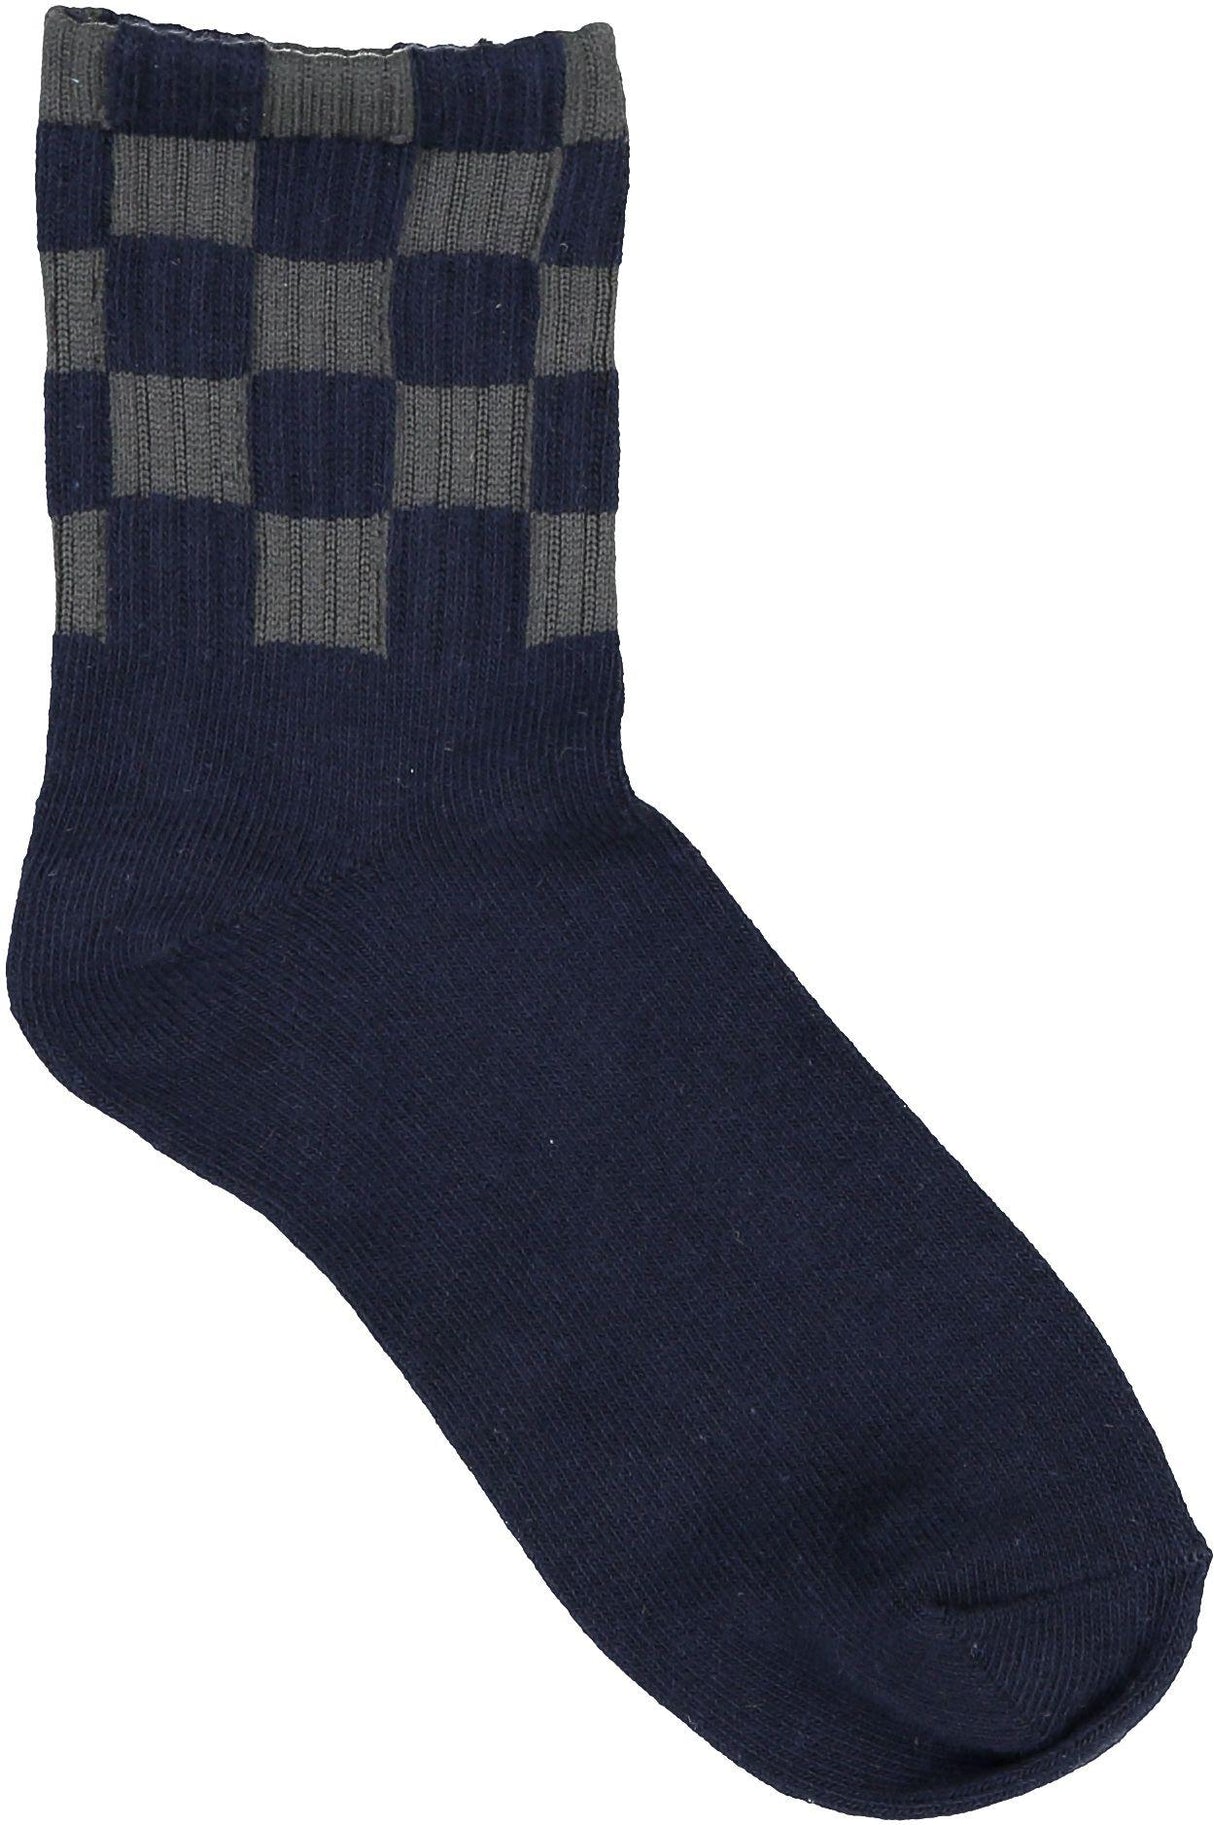 Zubii Boys Checkered Crew Dress Socks - 618